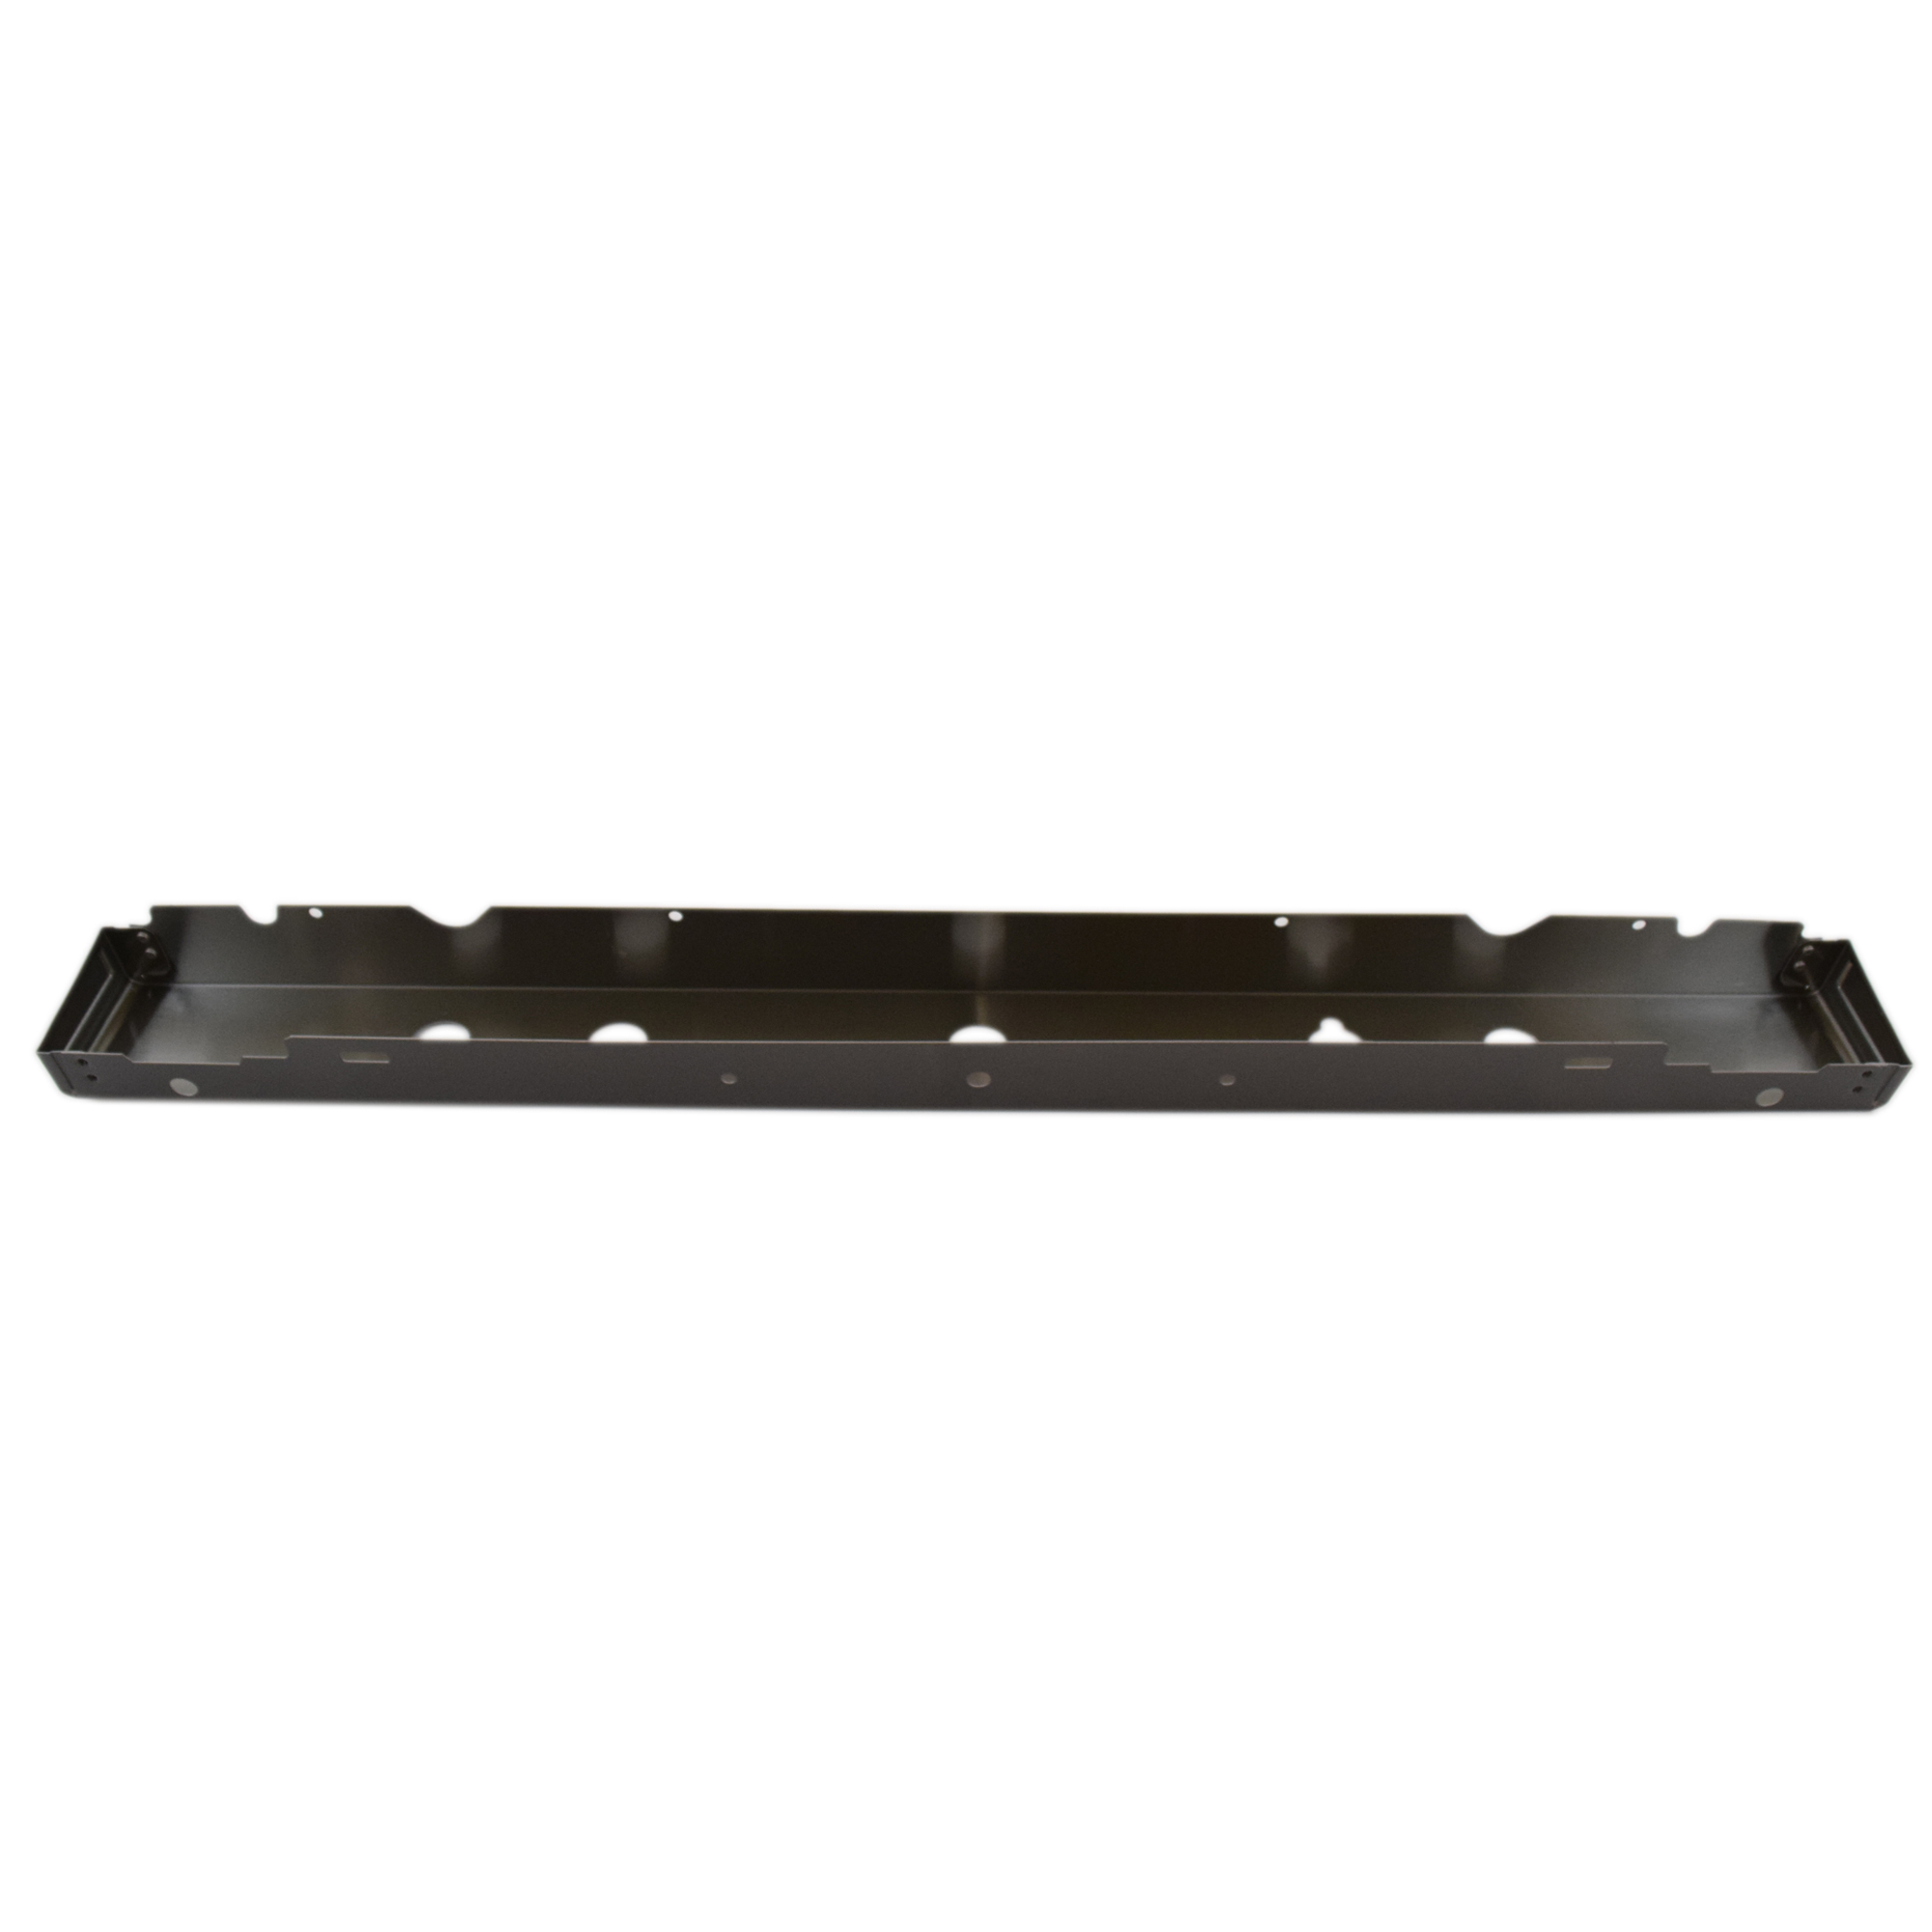 Frigidaire 316606122 Range Surface Burner Manifold Panel (Dark Stainless) Genuine Original Equipment Manufacturer (OEM) Part